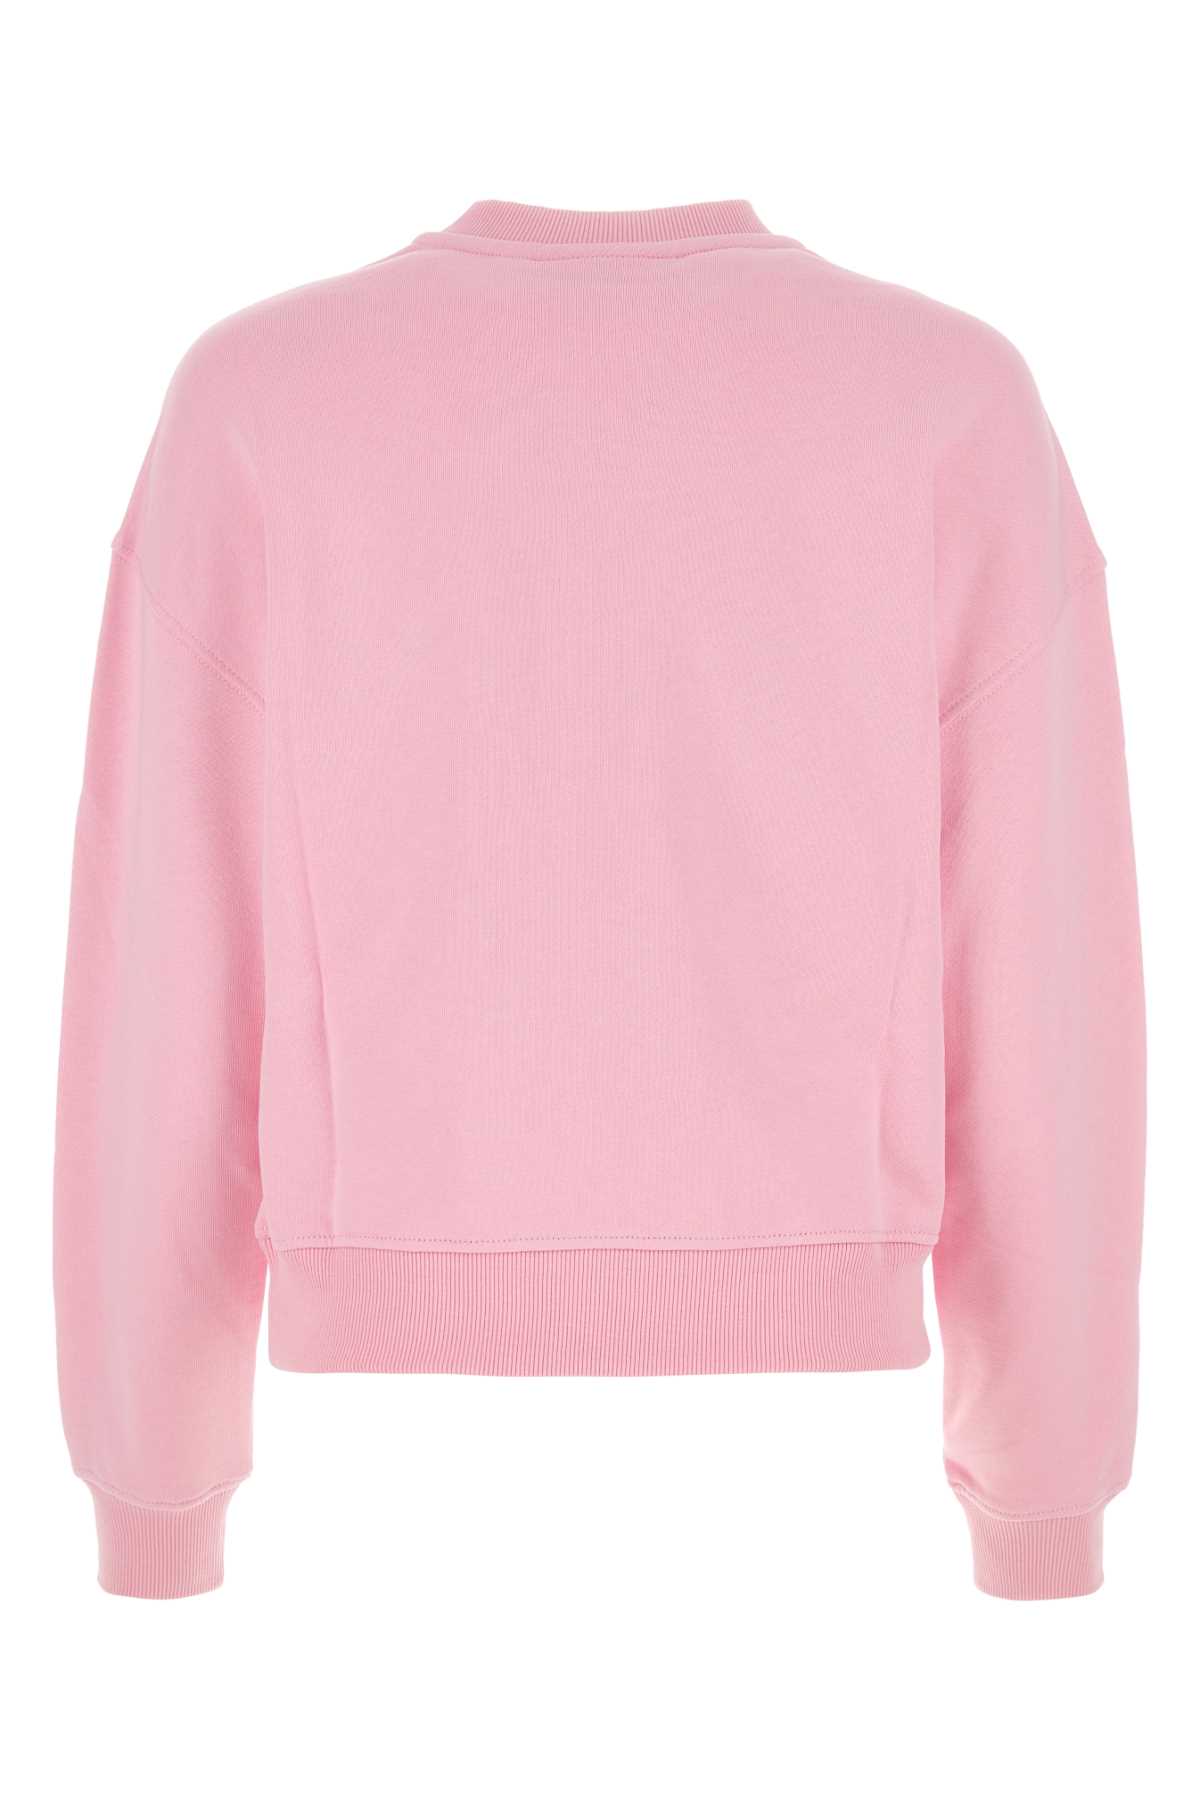 Chiara Ferragni Pink Cotton Sweatshirt In Liliacsachet